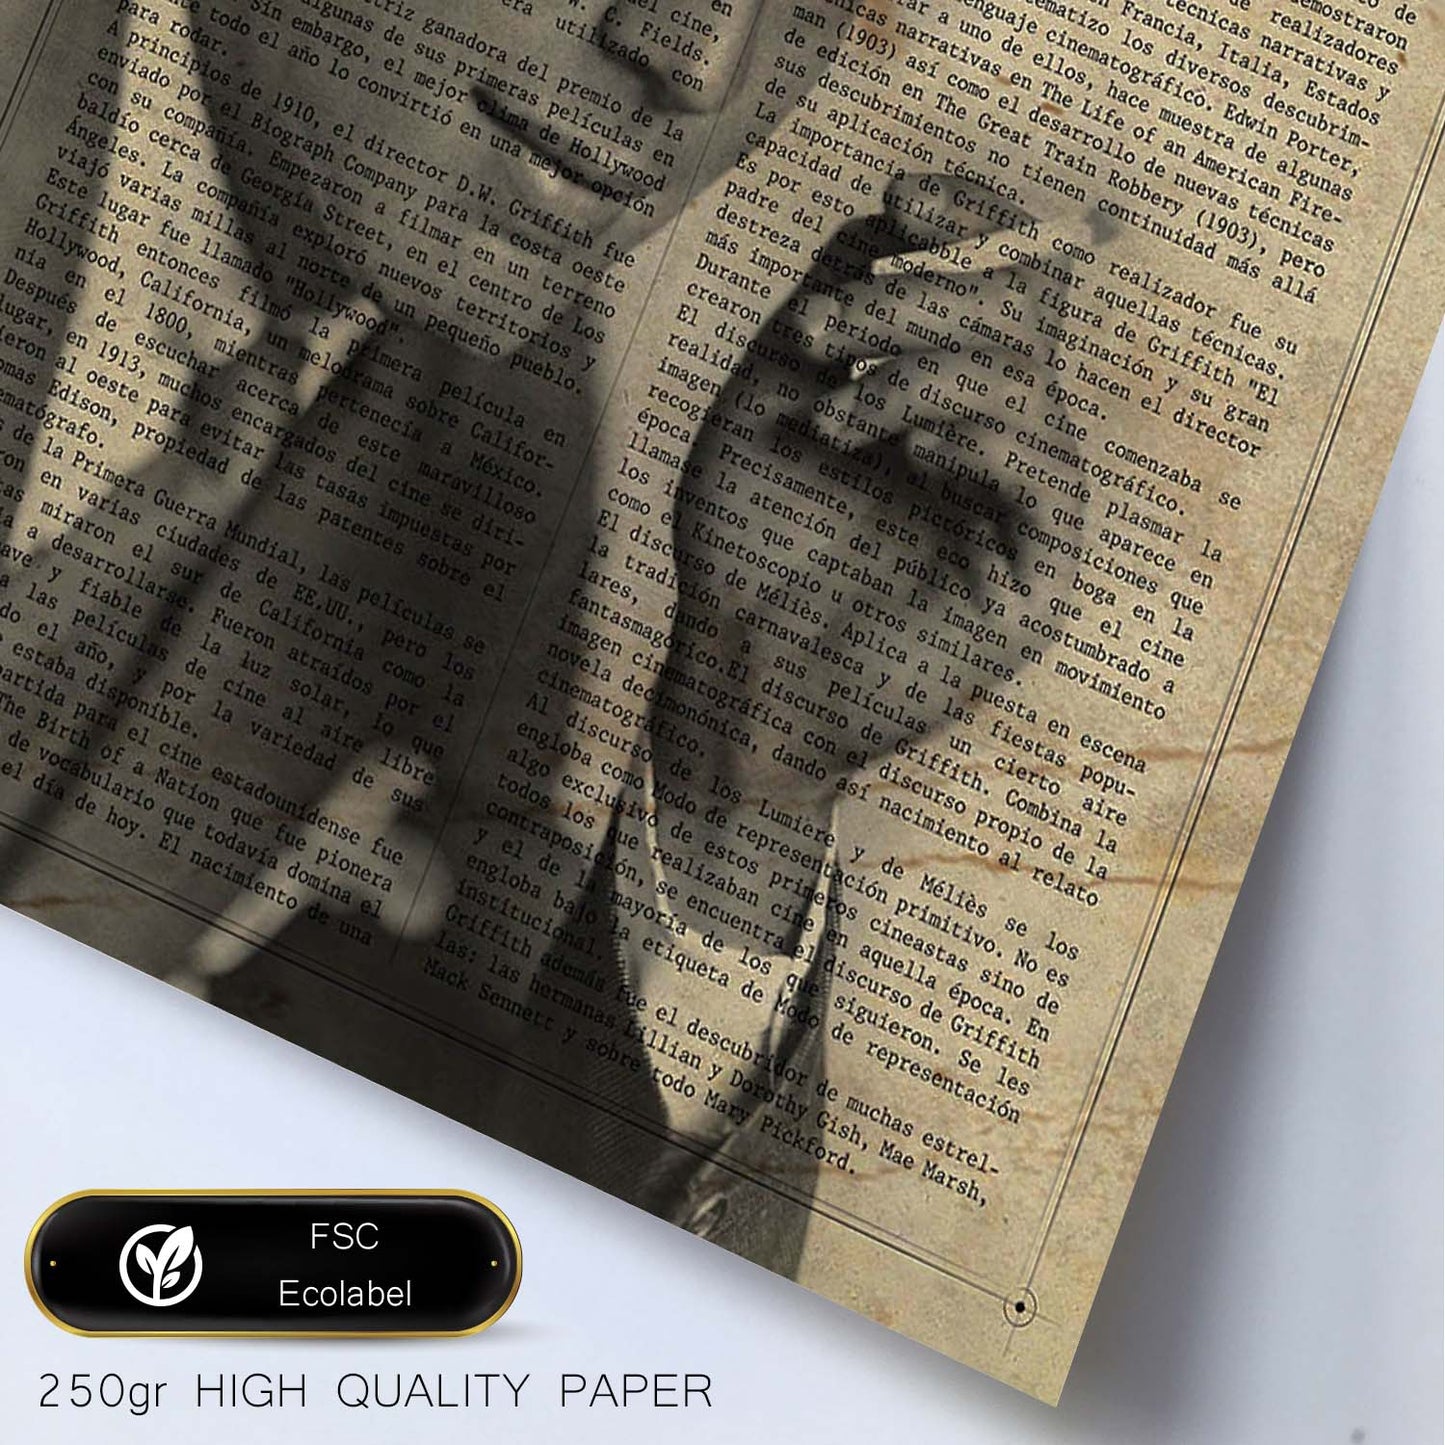 Poster de Humphrey Bogart. Láminas de personajes importantes. Posters de músicos, actores, inventores, exploradores, ...-Artwork-Nacnic-Nacnic Estudio SL